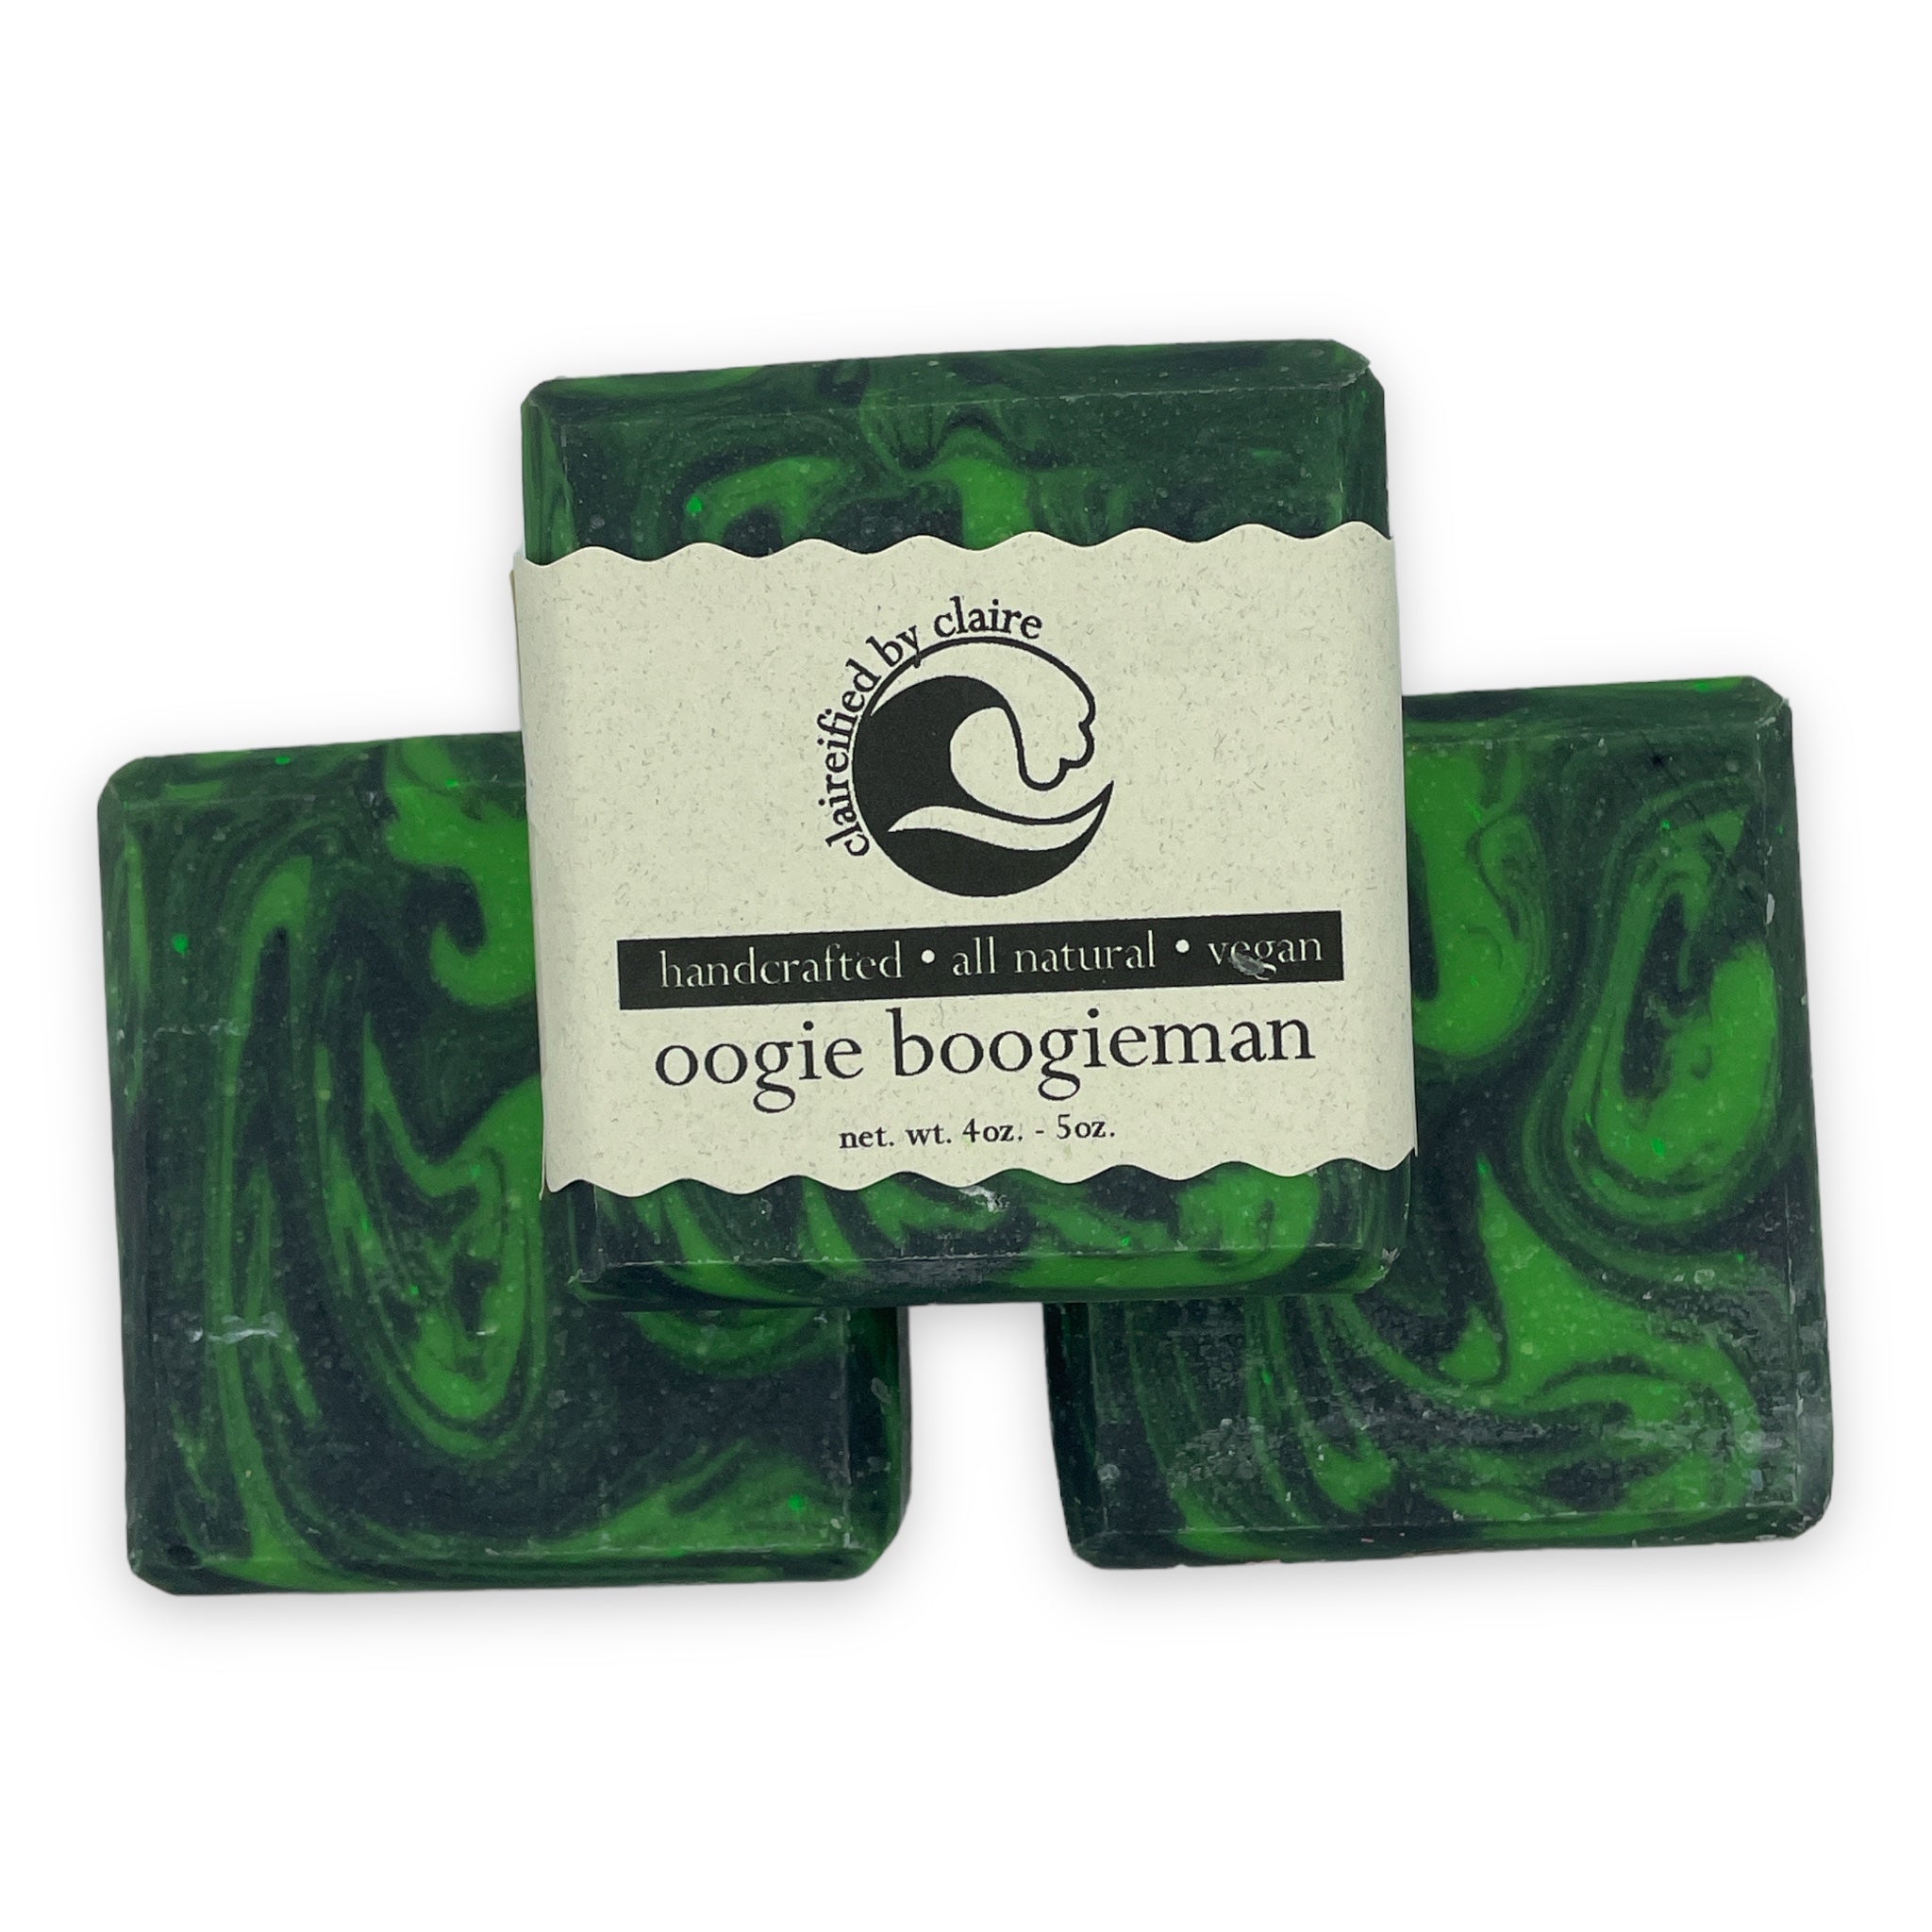 Oogie Boogieman handmade soap inspired by the Nightmare Before XMas character Oogie Boogie